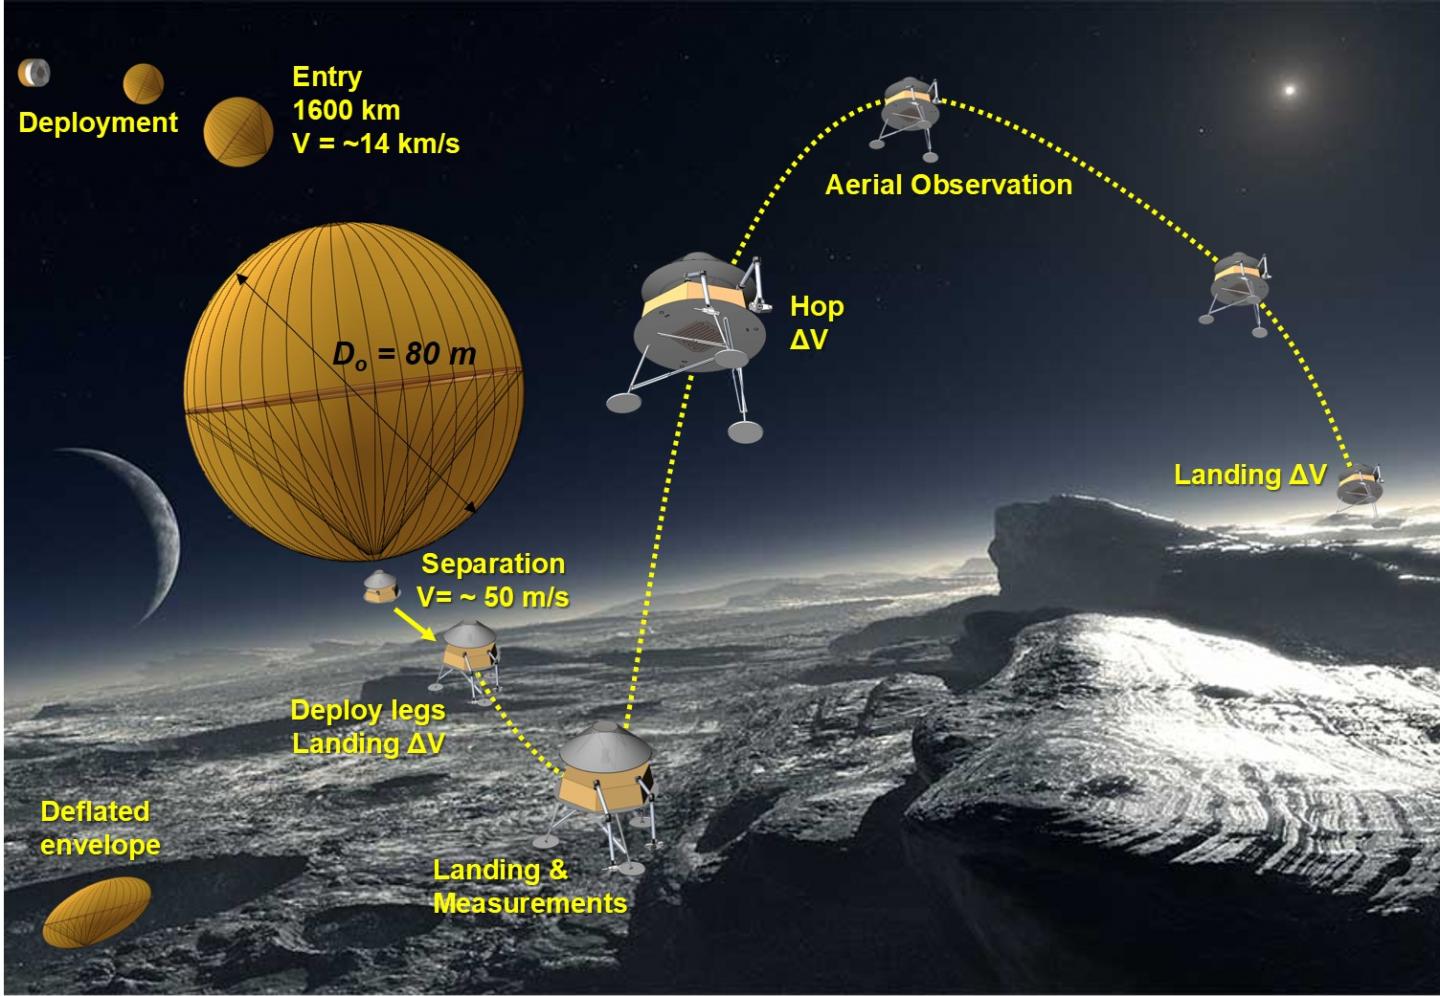 Pluto Lander Entrycraft Concept of Operations